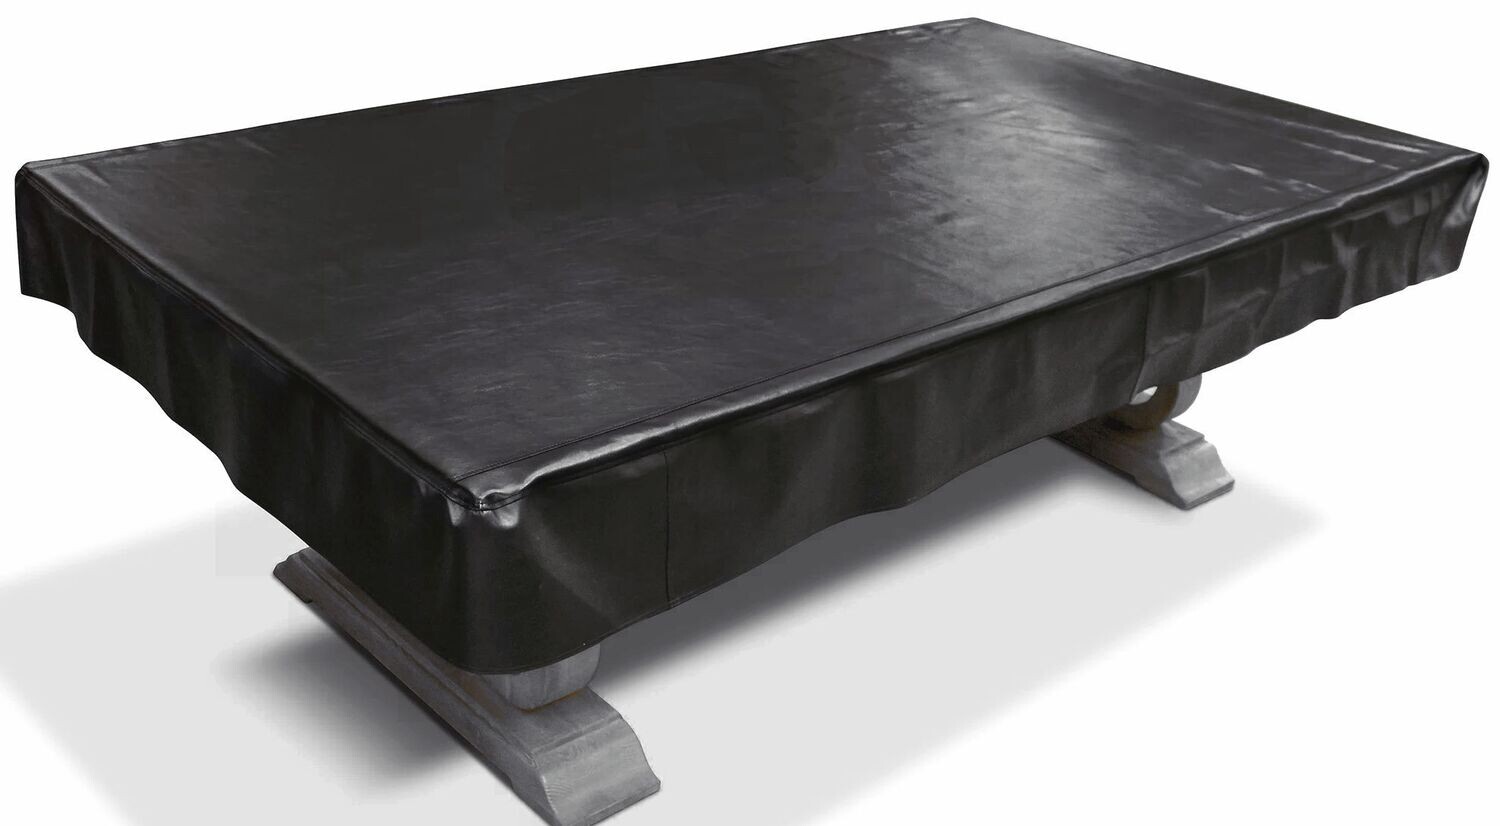 8 foot fitted heavy duty naugahyde billiard table cover